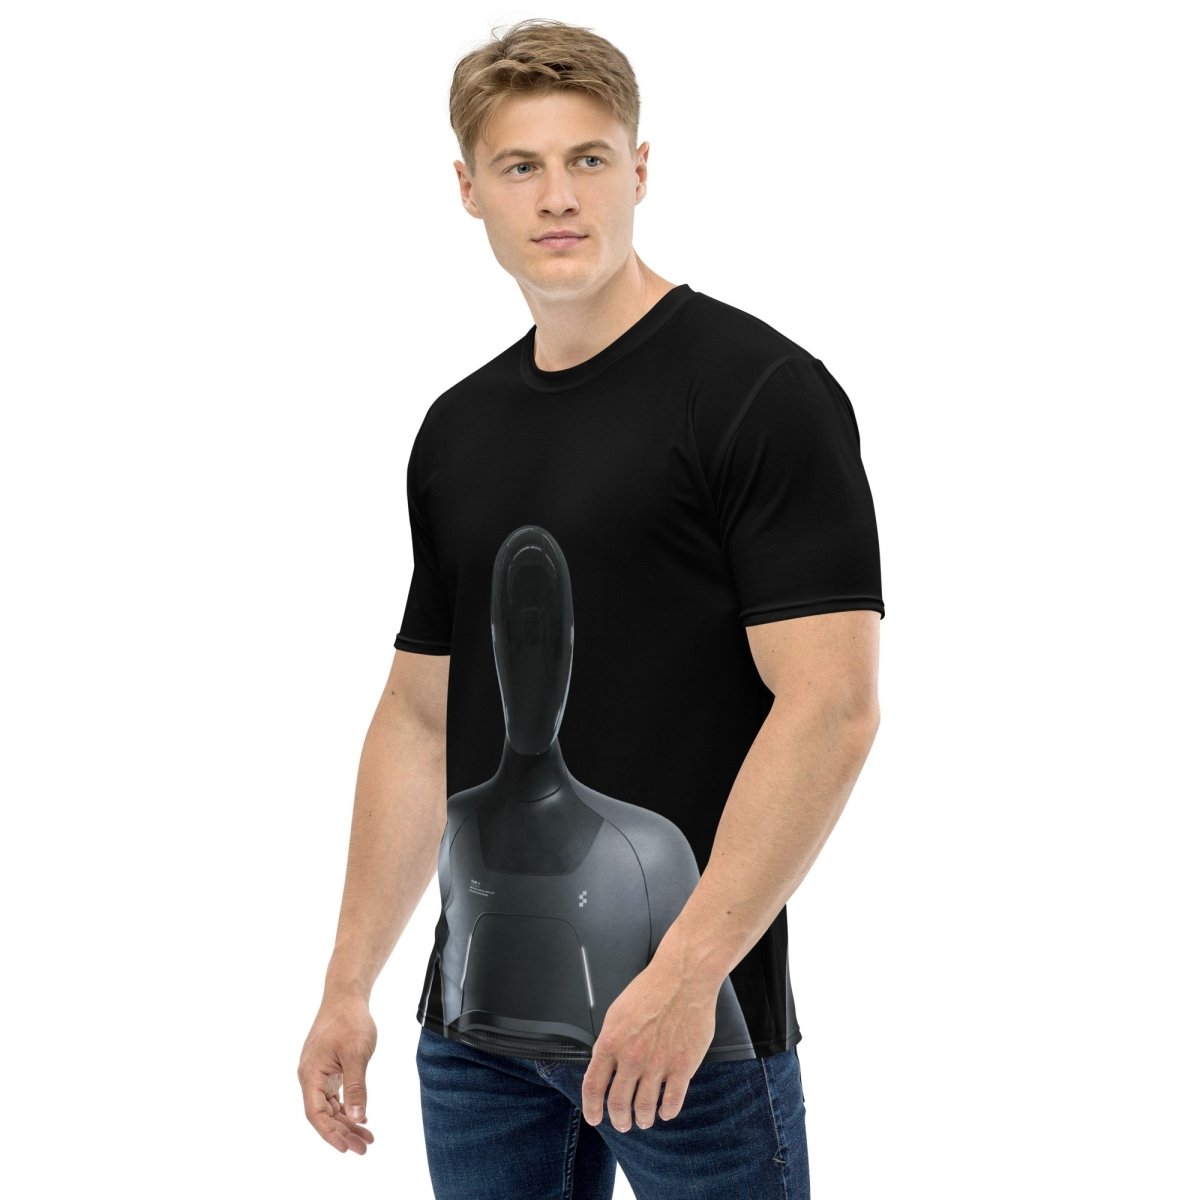 All - Over Print Figure AI Humanoid Robot T - Shirt (men) - M - AI Store